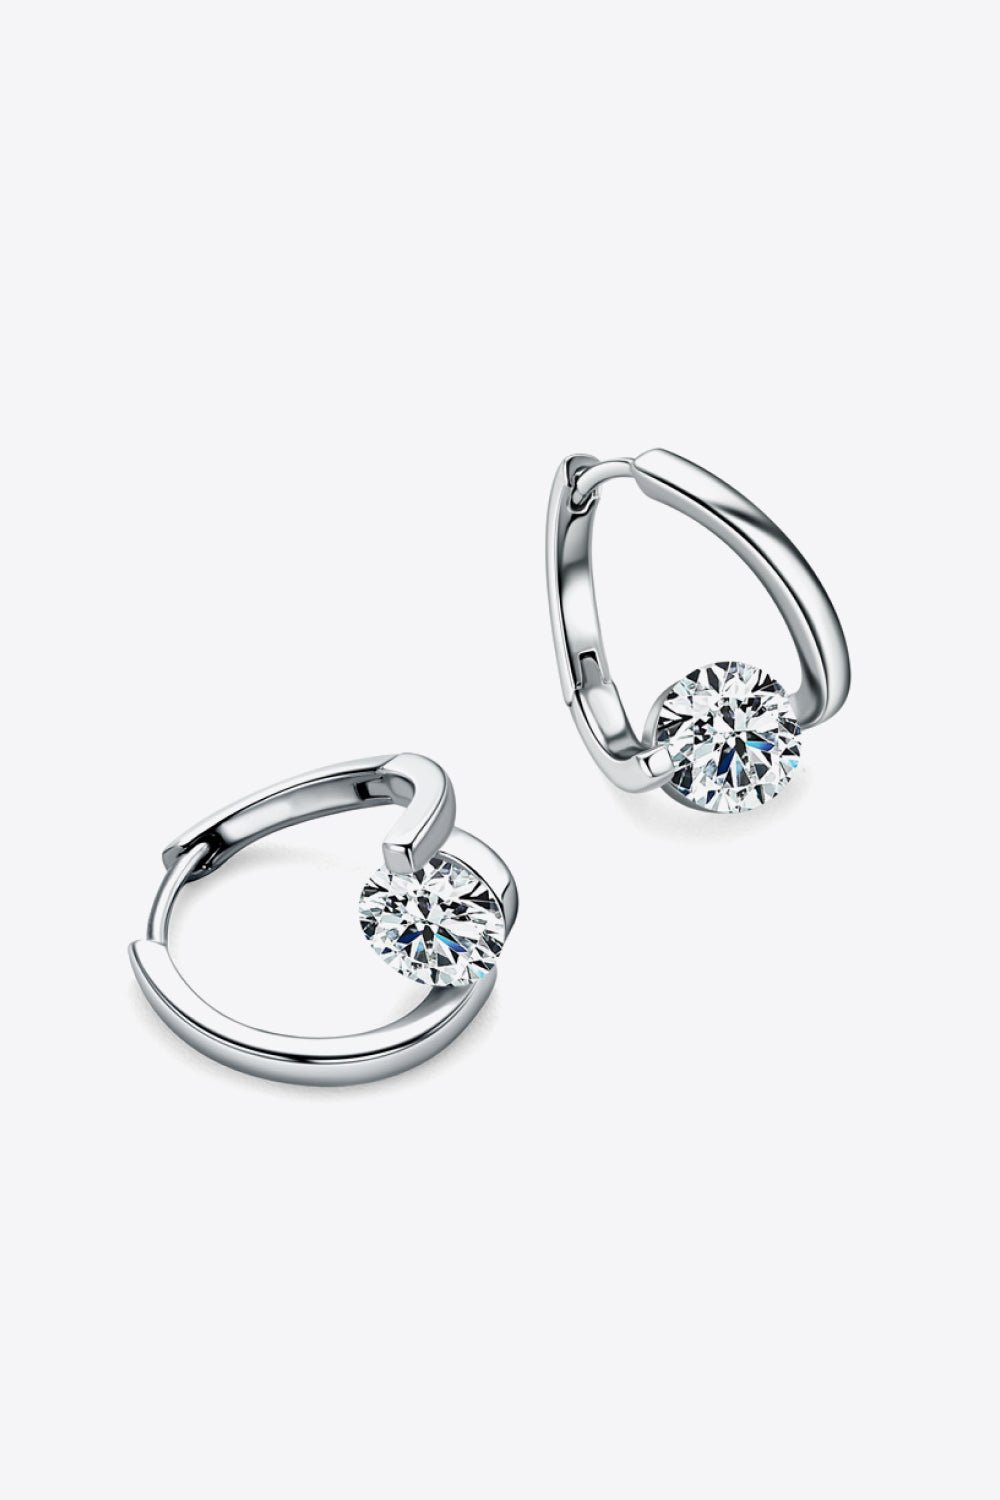 2 Carat Moissanite 925 Sterling Silver Heart Earrings - Uylee's Boutique